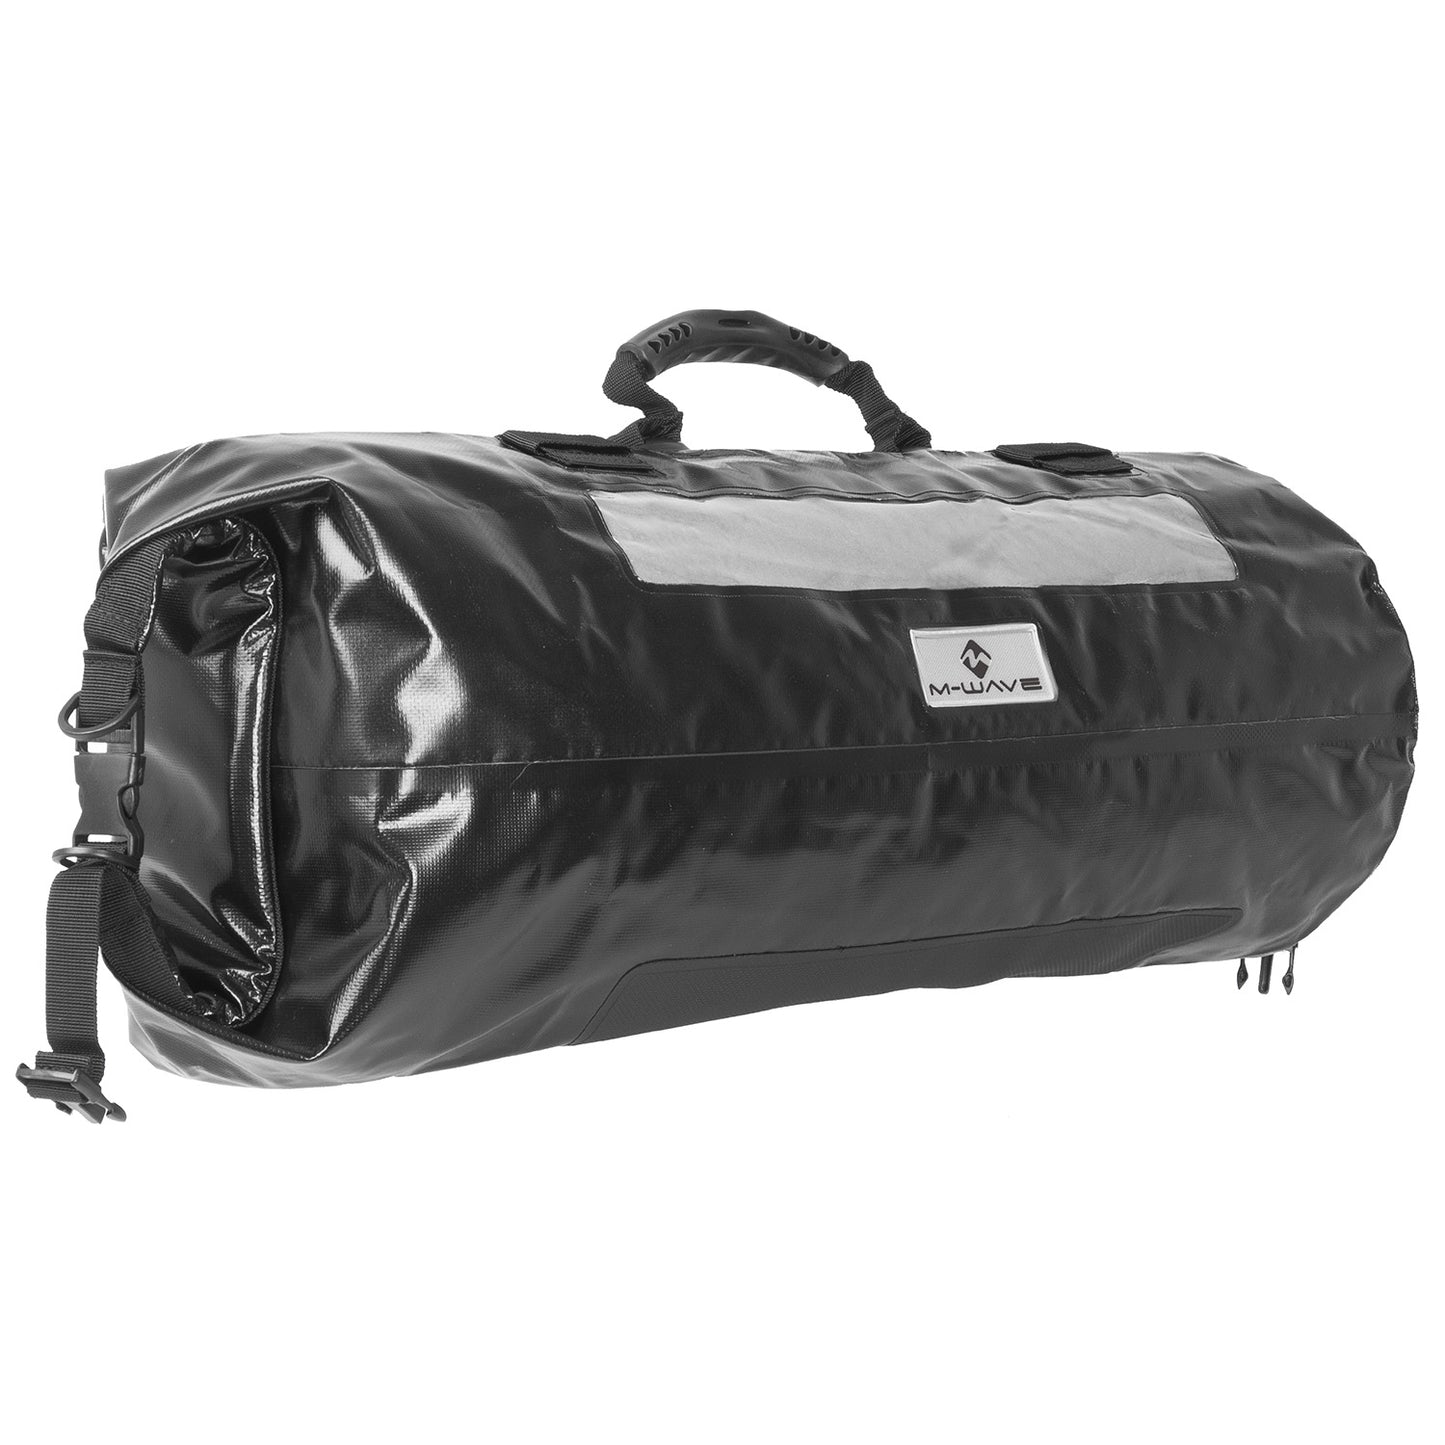 M-WAVE Hudson Bay Duffle Bag